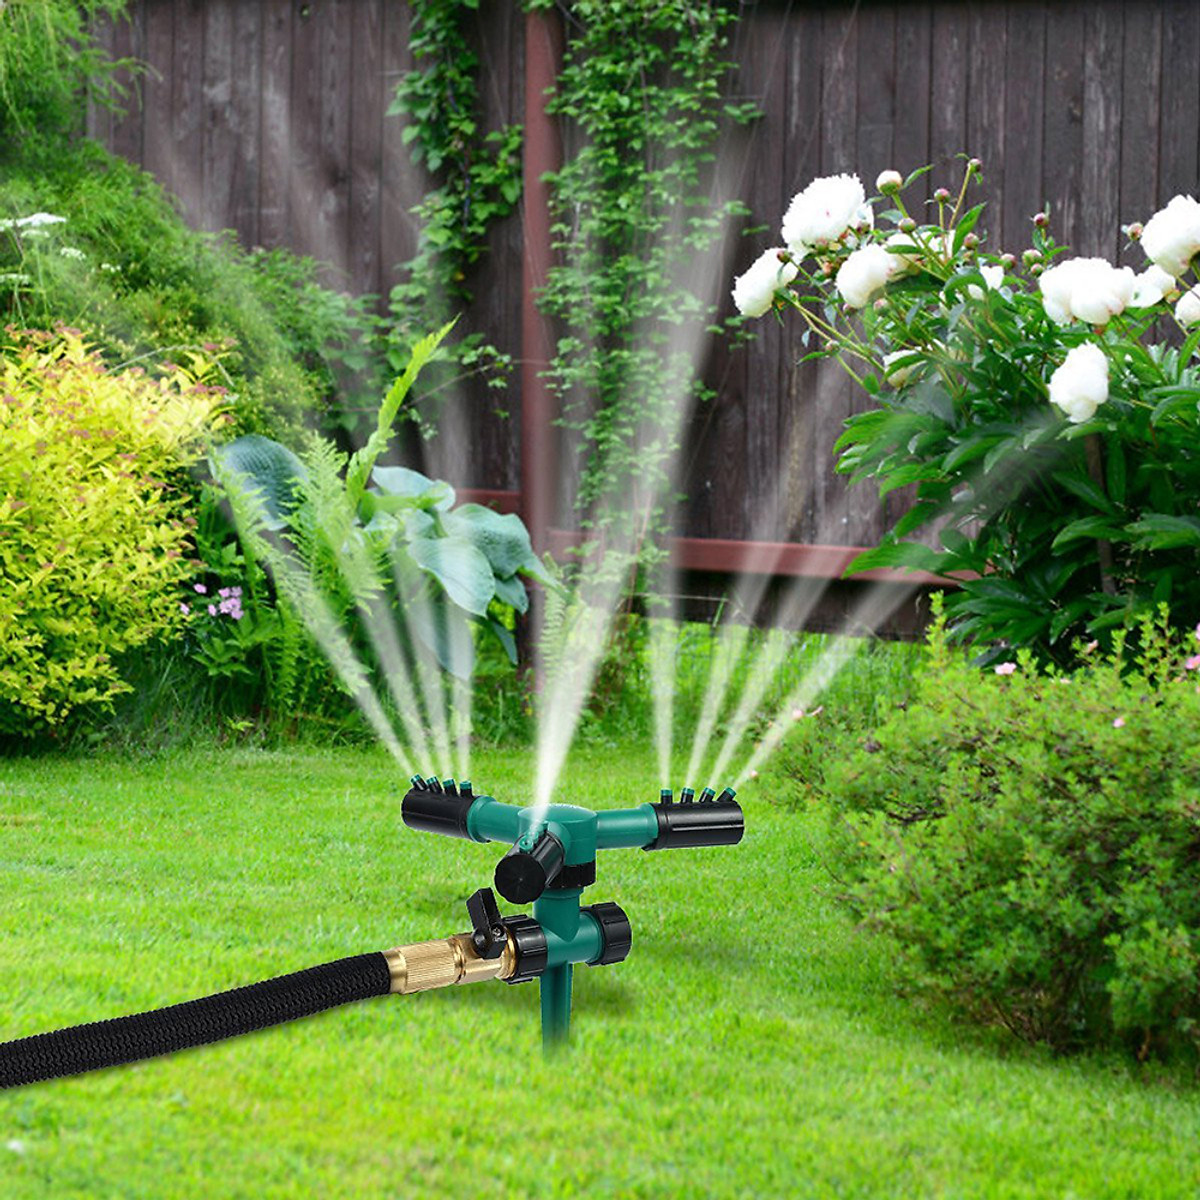 Rotating 360 Degree Sprinkler Garden Lawn Grass Watering System Water Hose Spray 